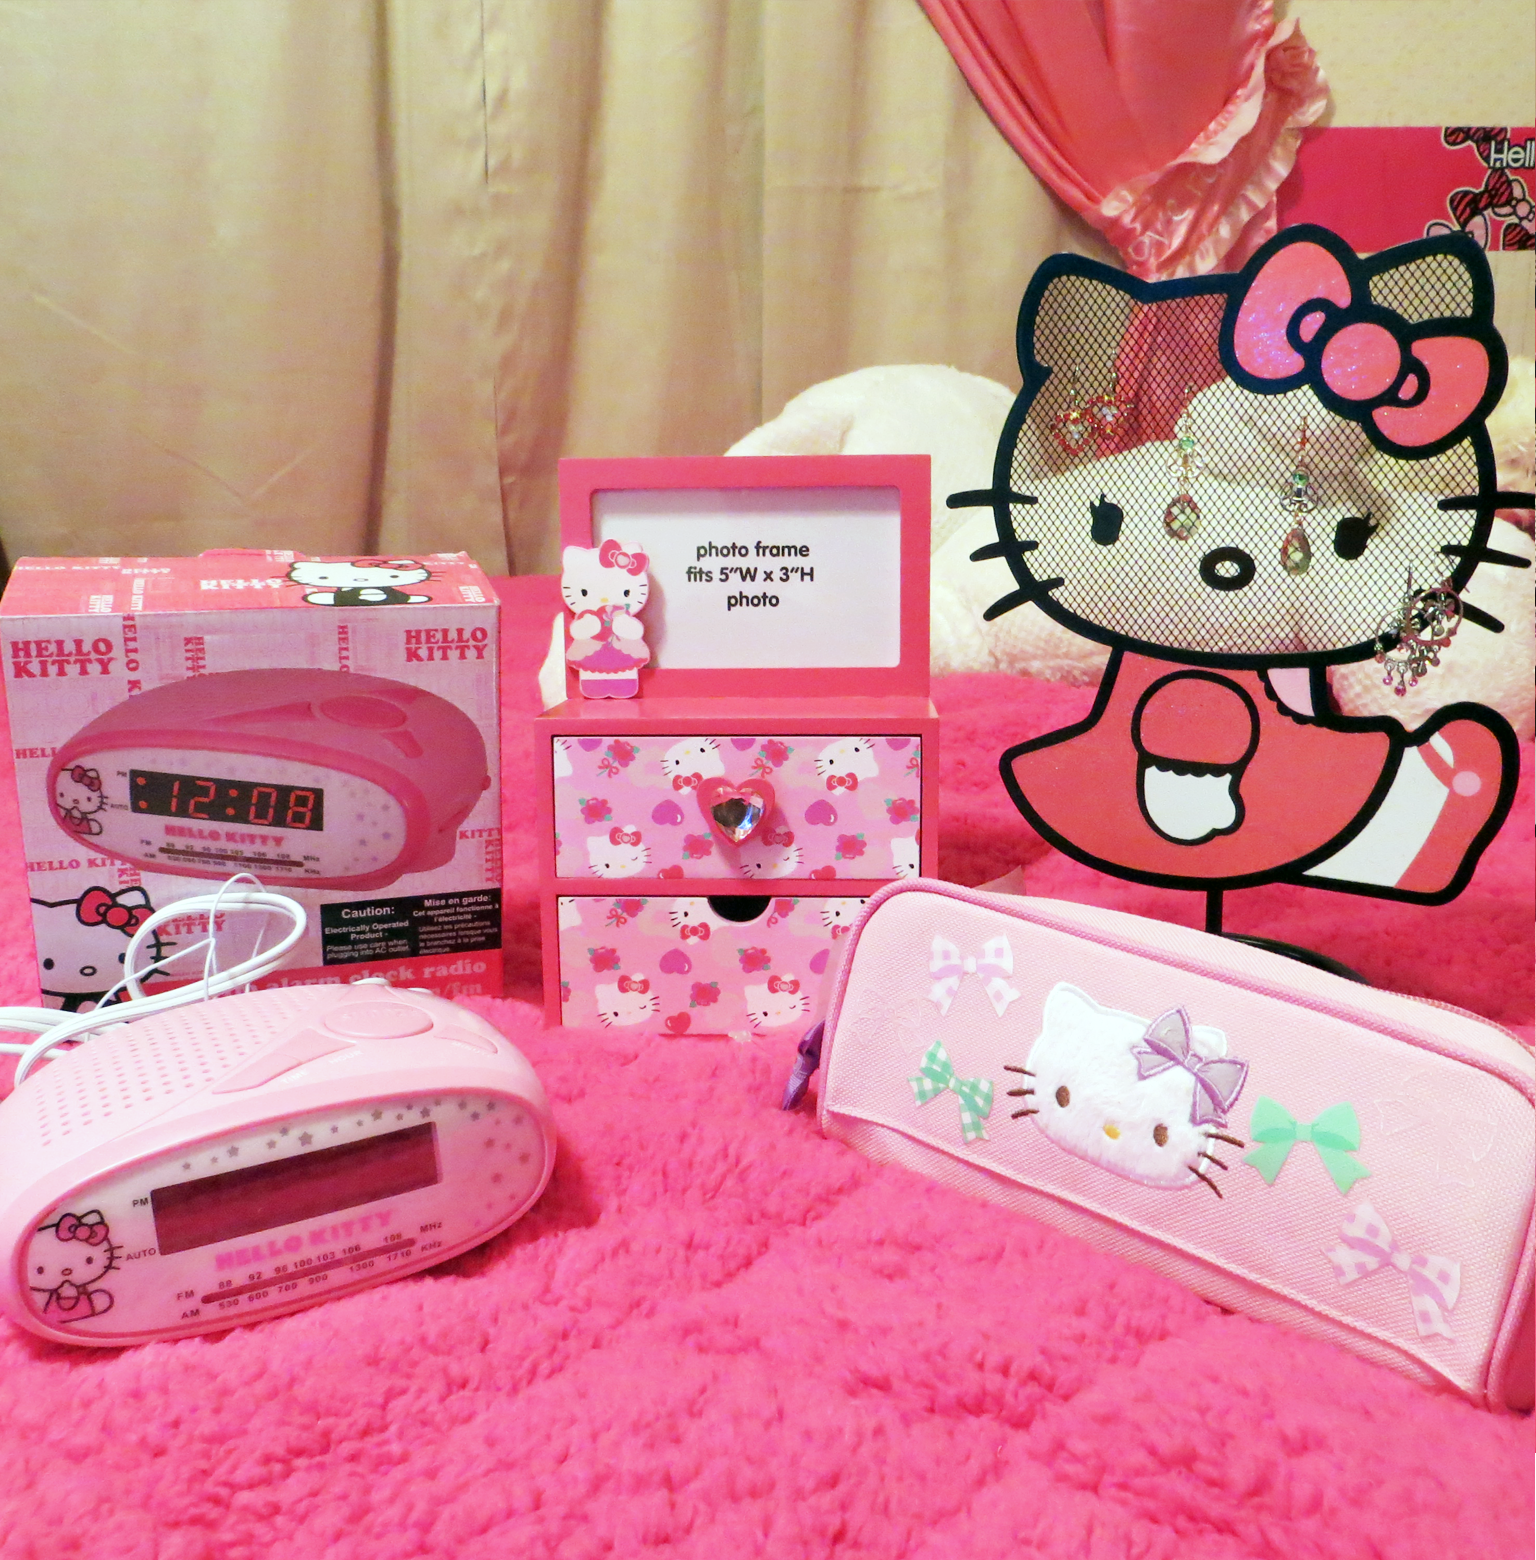 Okashi Yummy: Hello Kitty and pink presents *w*!